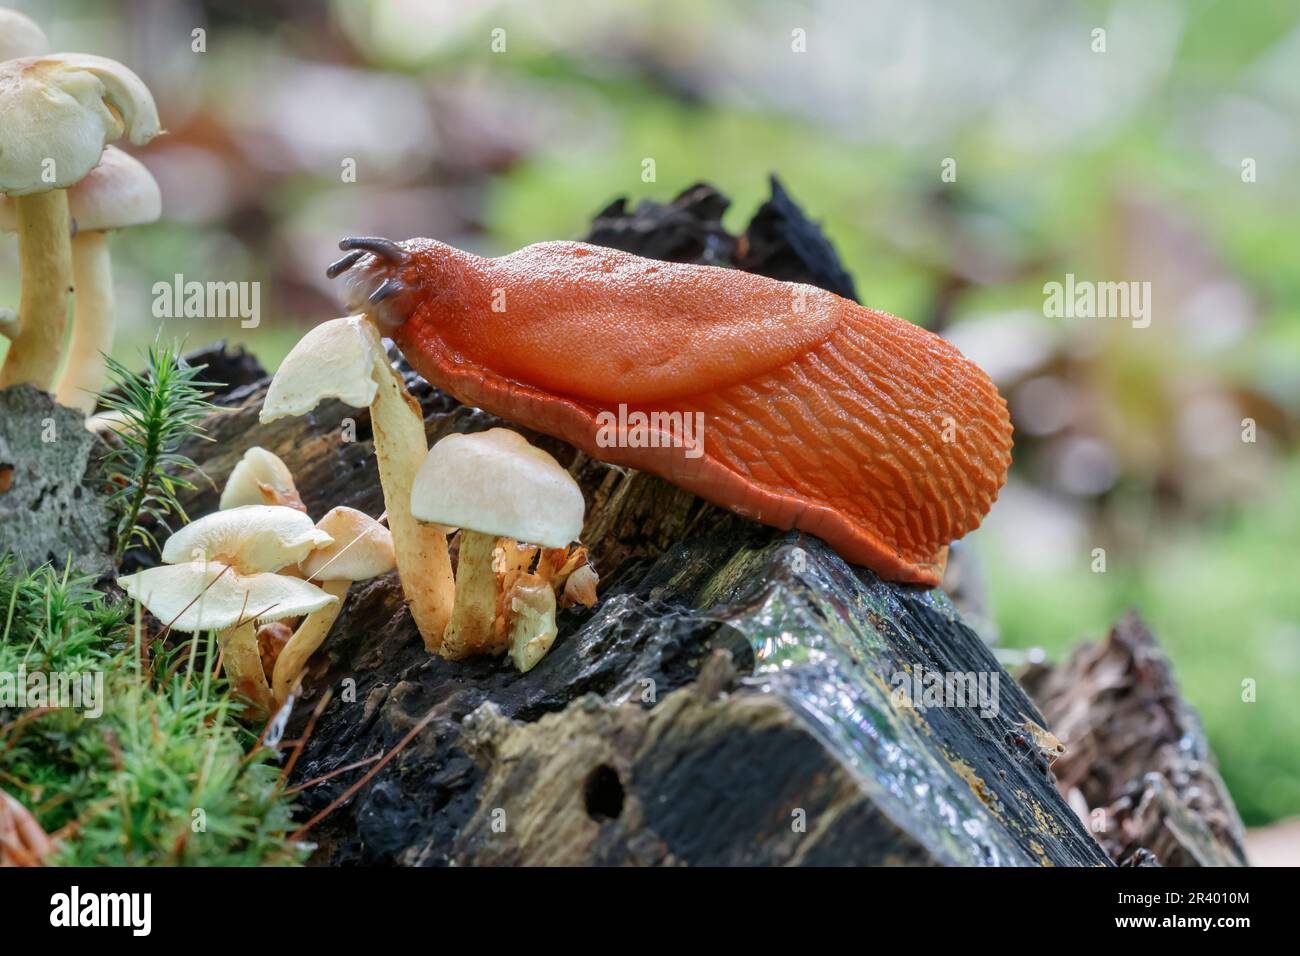 Arion rufus, conosciuto come European Red Slug, Large Red Slug, Chocolate arion Foto Stock